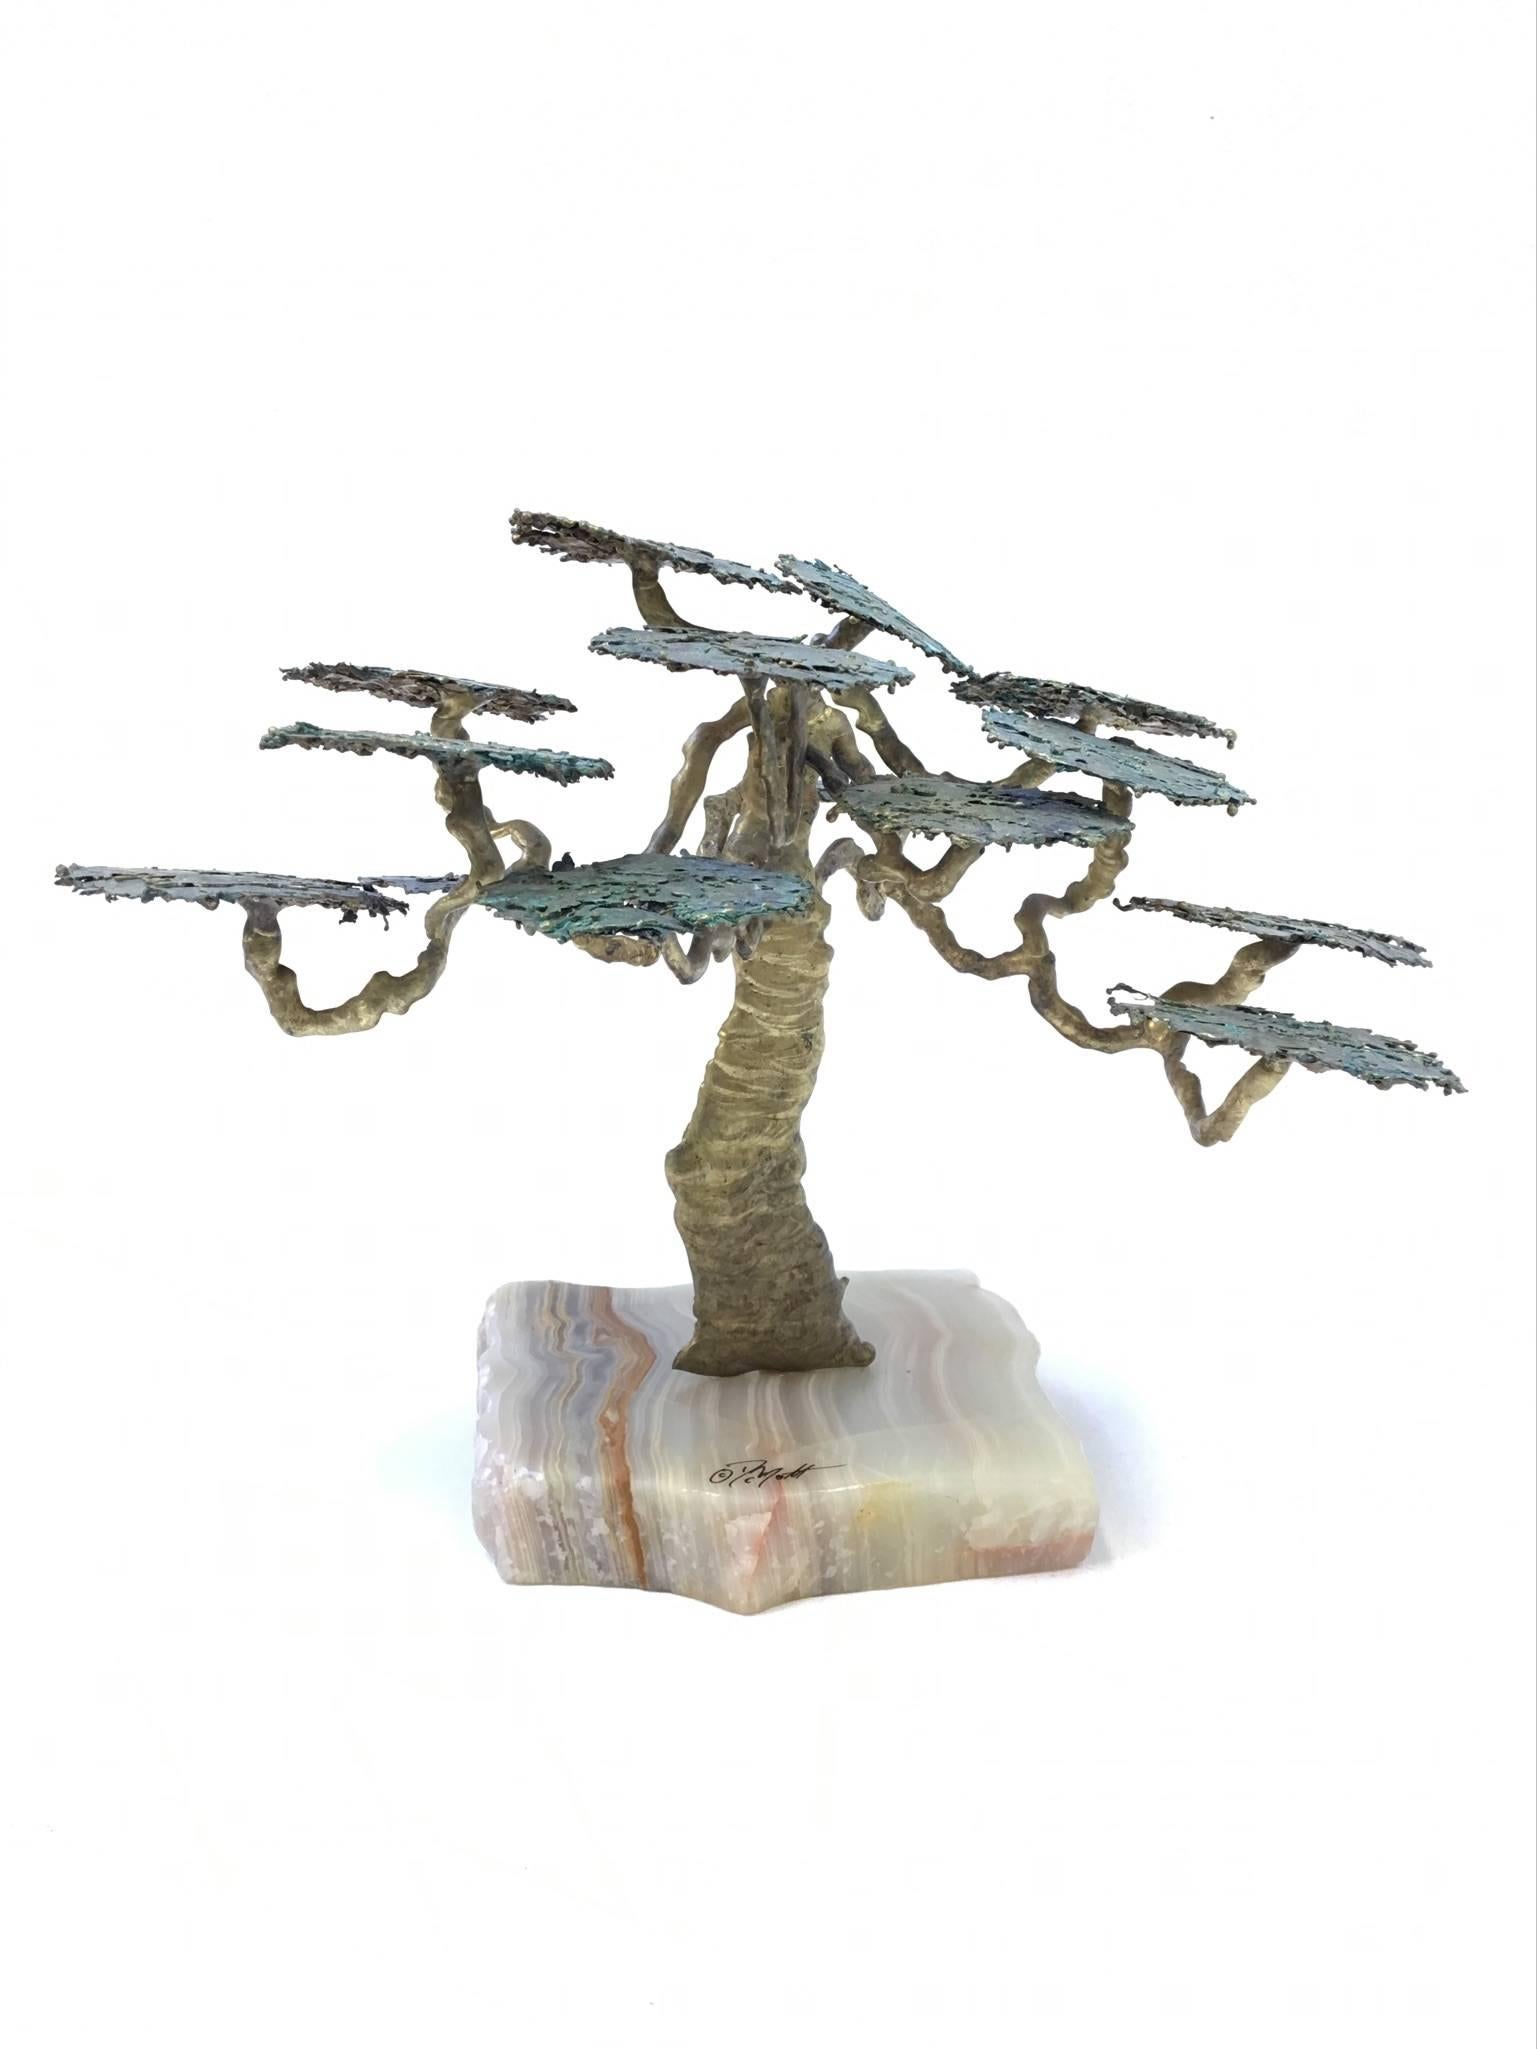 A beautiful bronze Monterey Cypress tree sculpture by John Demott.
The base is quarts and is signed Demott. 
Dim: 11